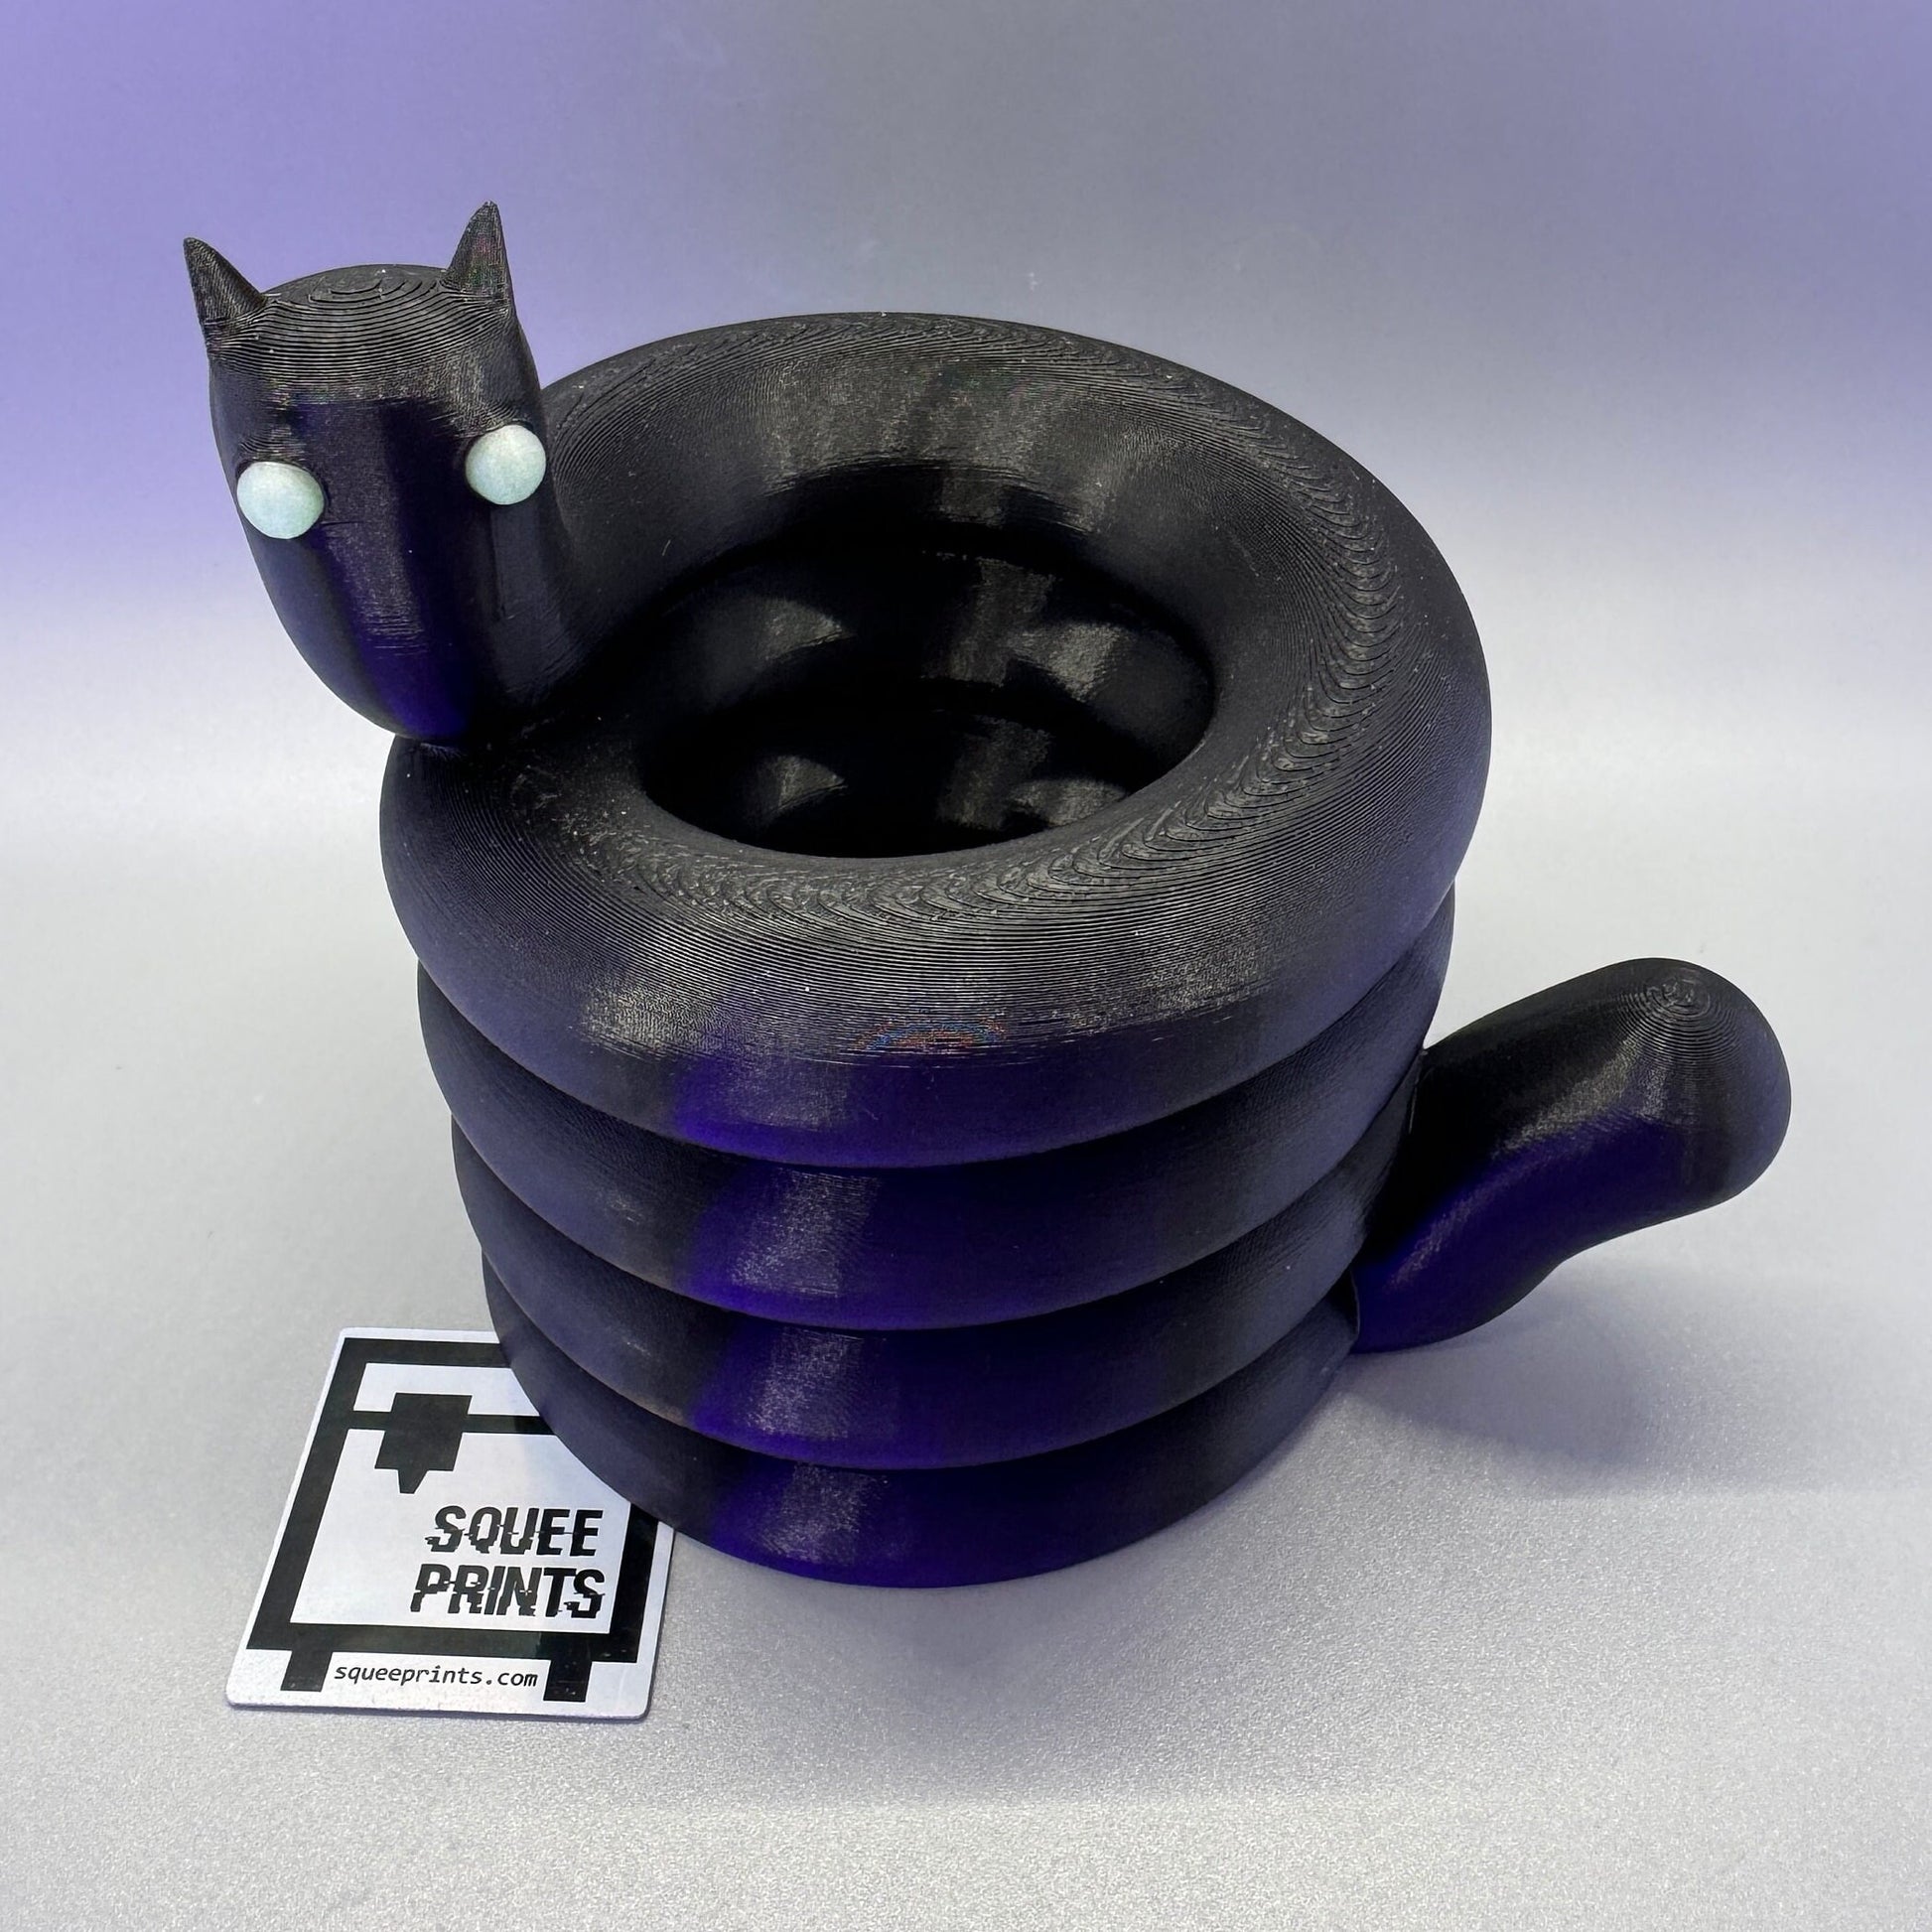 Goth Cat Desk Organizer Set | Glow in the Dark - Squee Prints